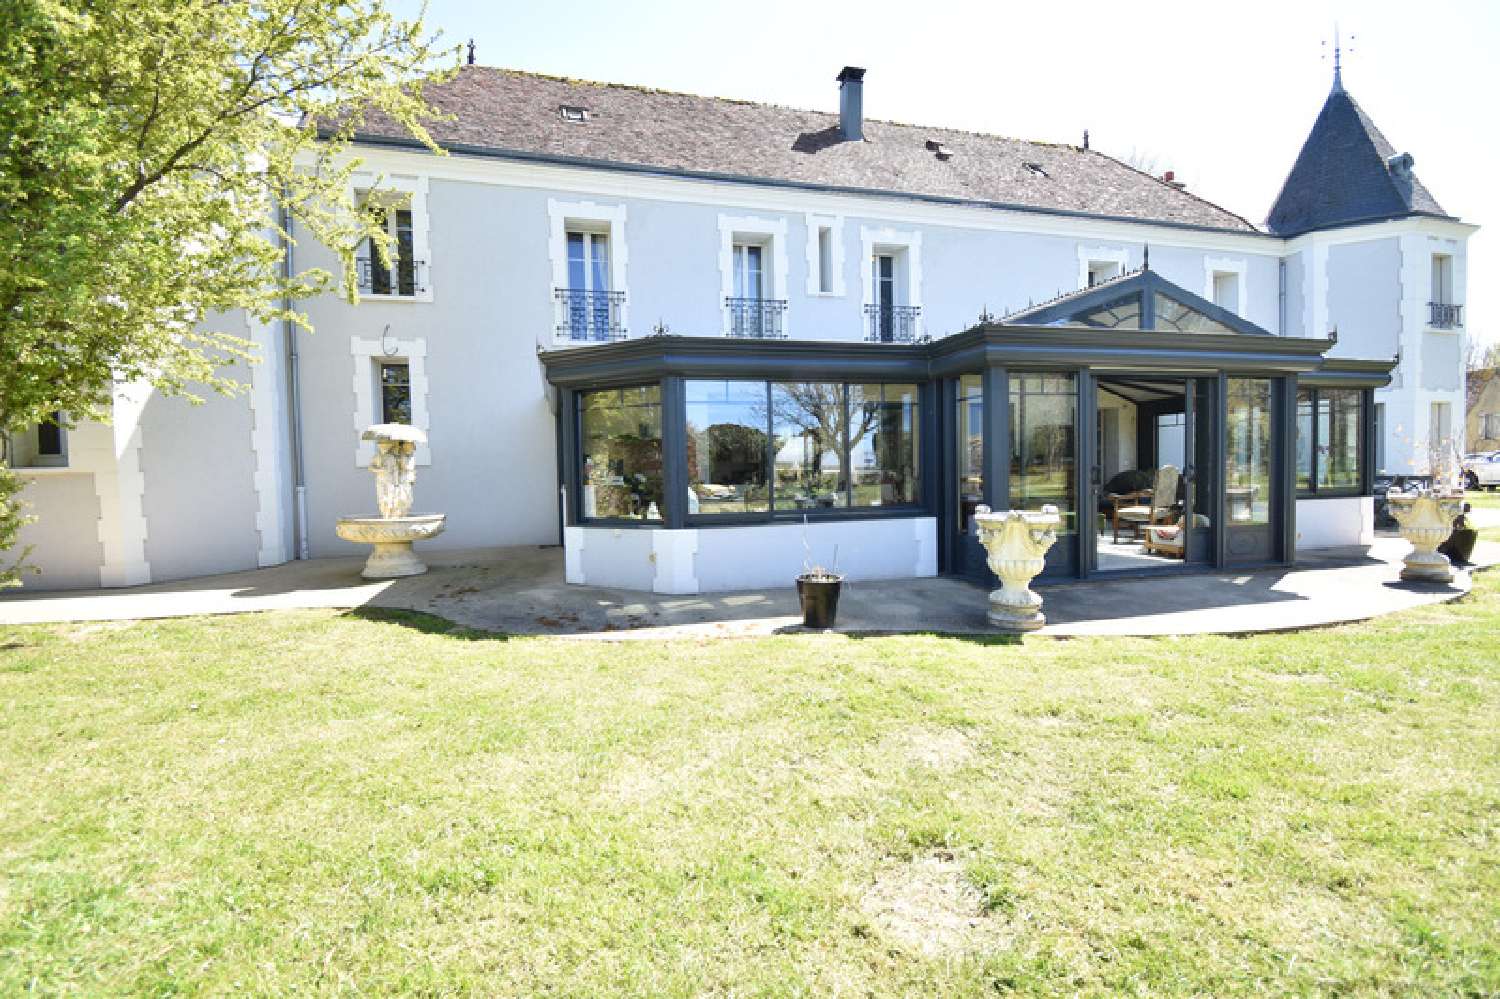  for sale estate Sandarville Eure-et-Loir 1